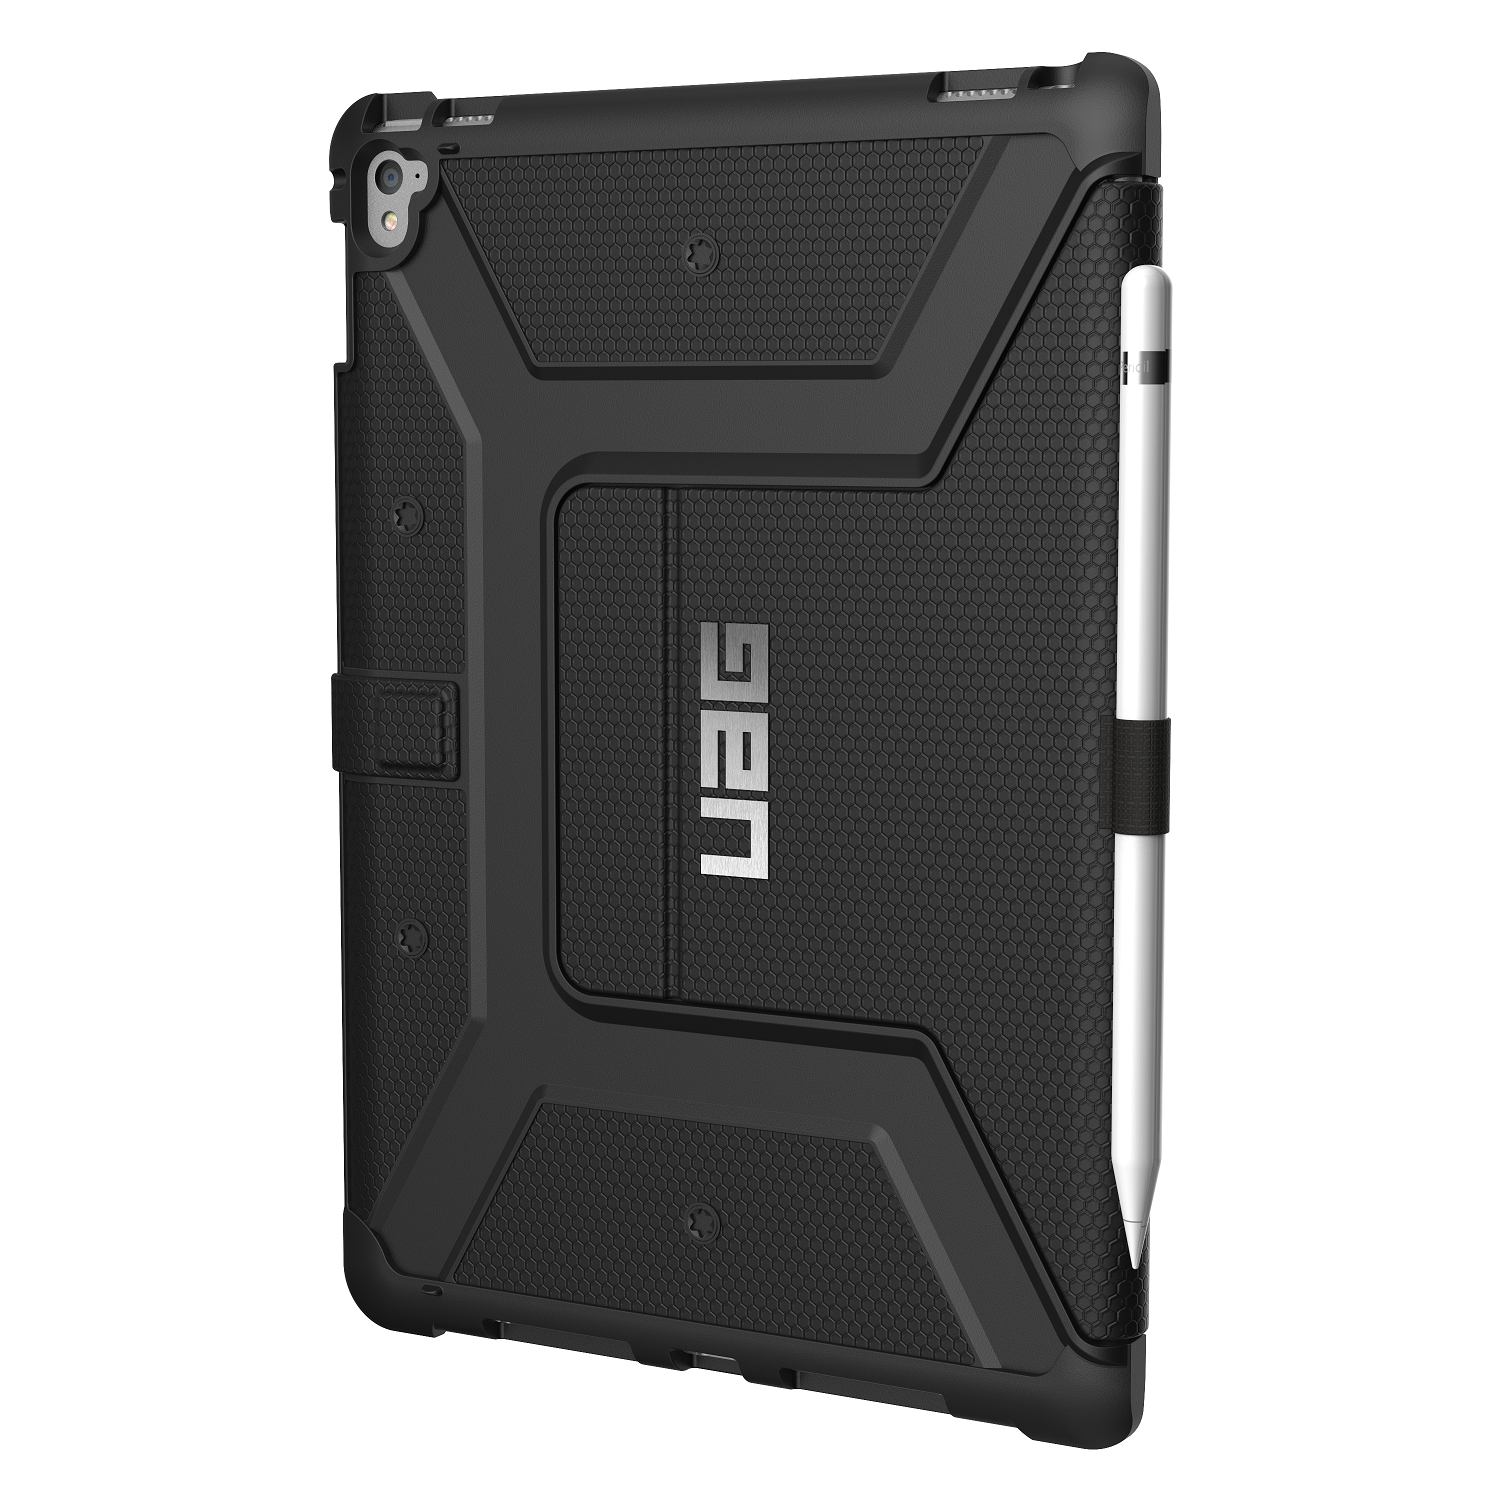 Black UAG iPad Pro 9.7" Case